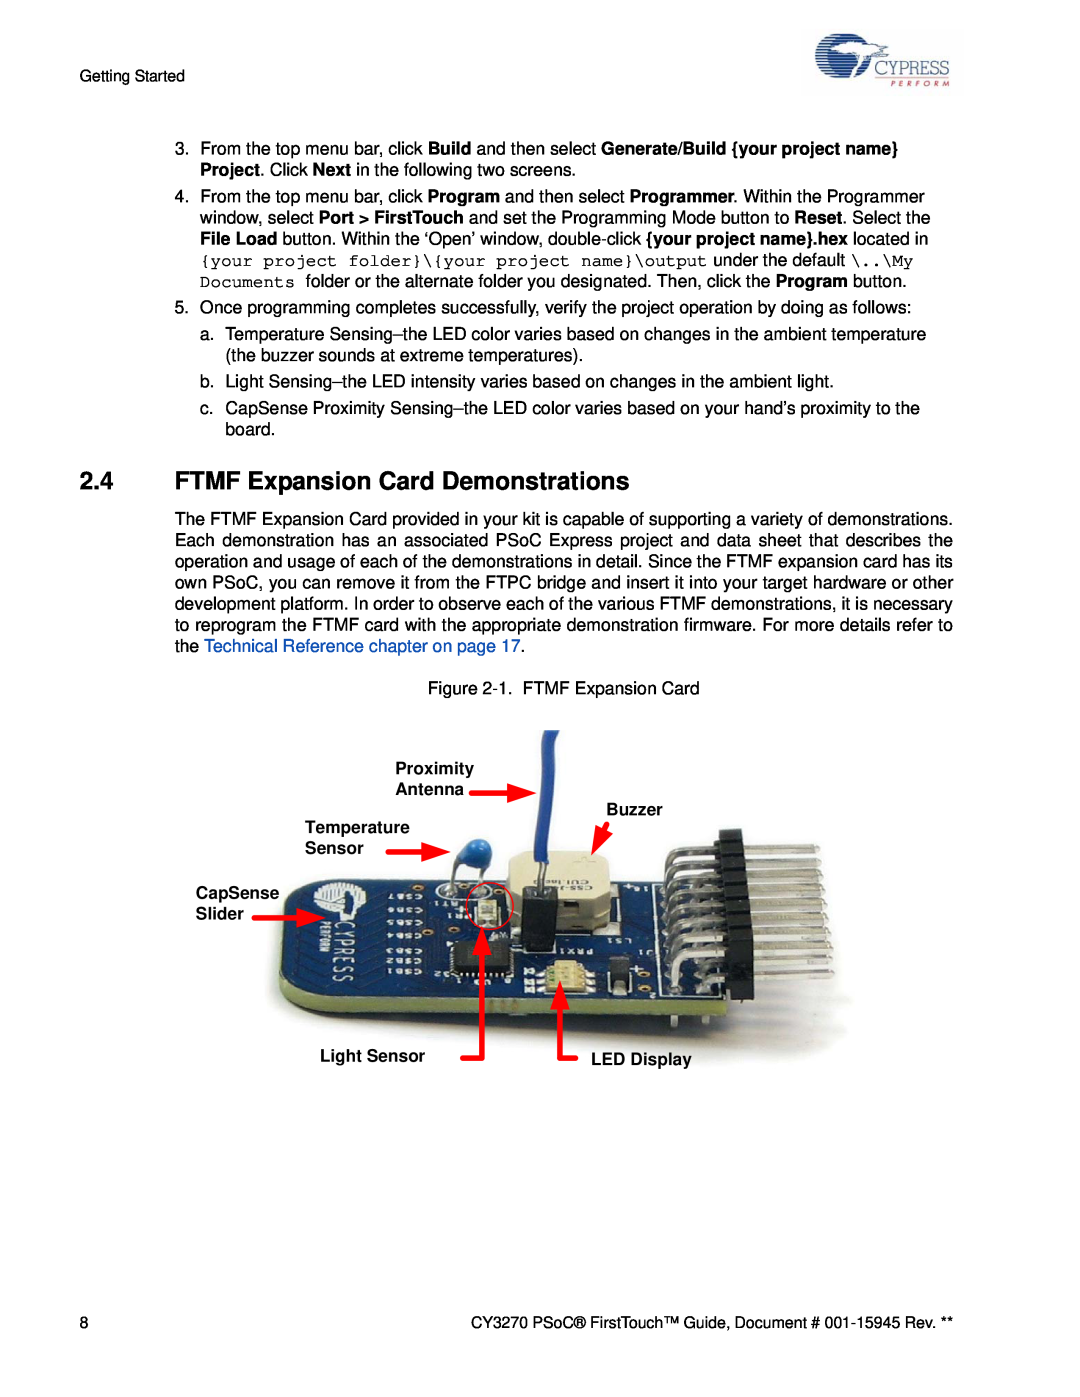 Cypress CY3270 manual FTMF Expansion Card Demonstrations, Proximity Antenna Buzzer Temperature Sensor CapSense Slider 